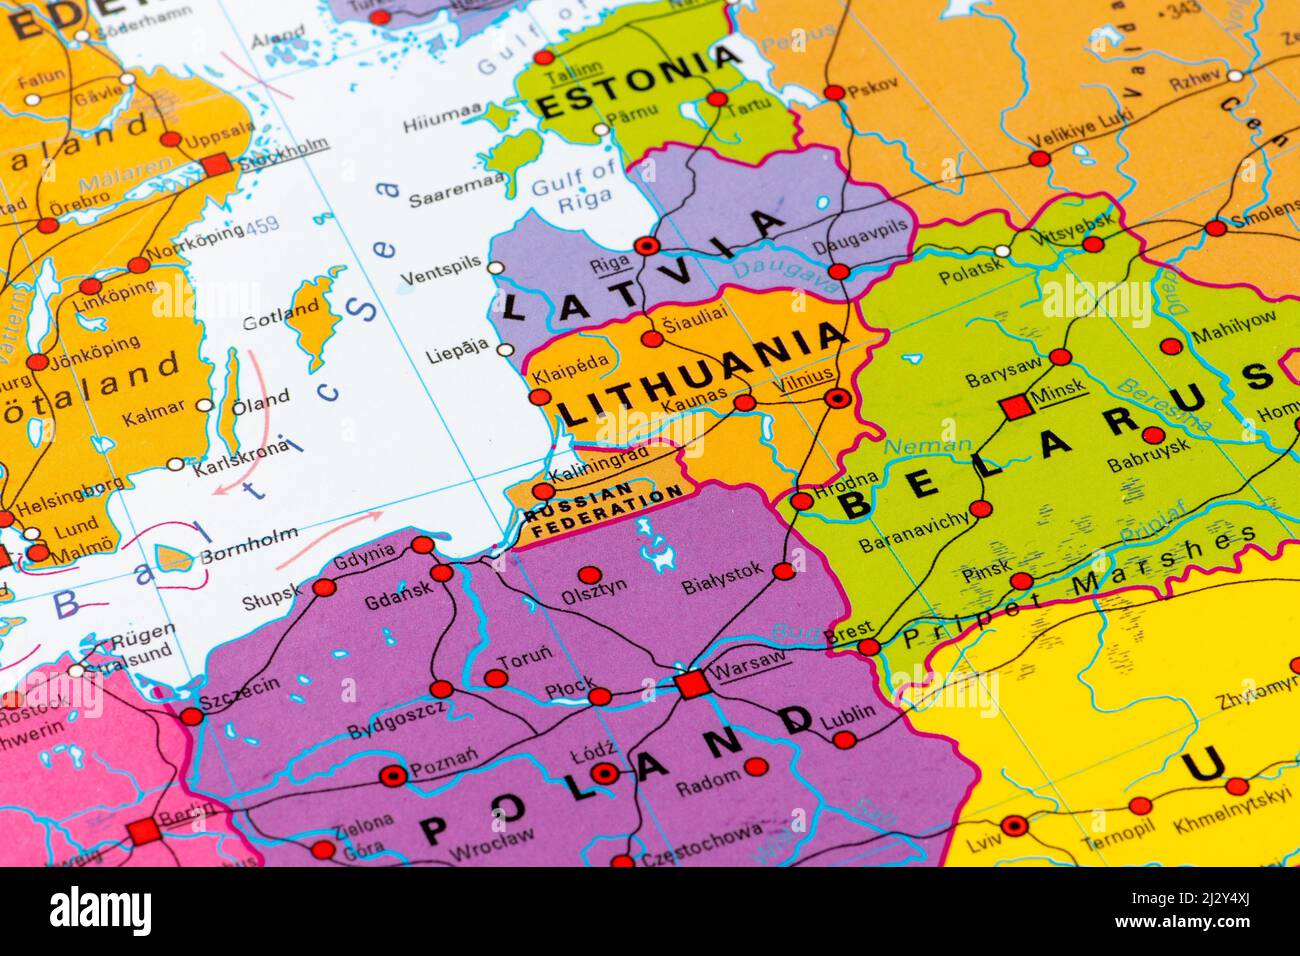 Map of Kaliningrad region or oblast, Russia, Russia Federation, with Poland, Ukraine, Belarus, Lithuania, Latvia and Estonia Stock Photo